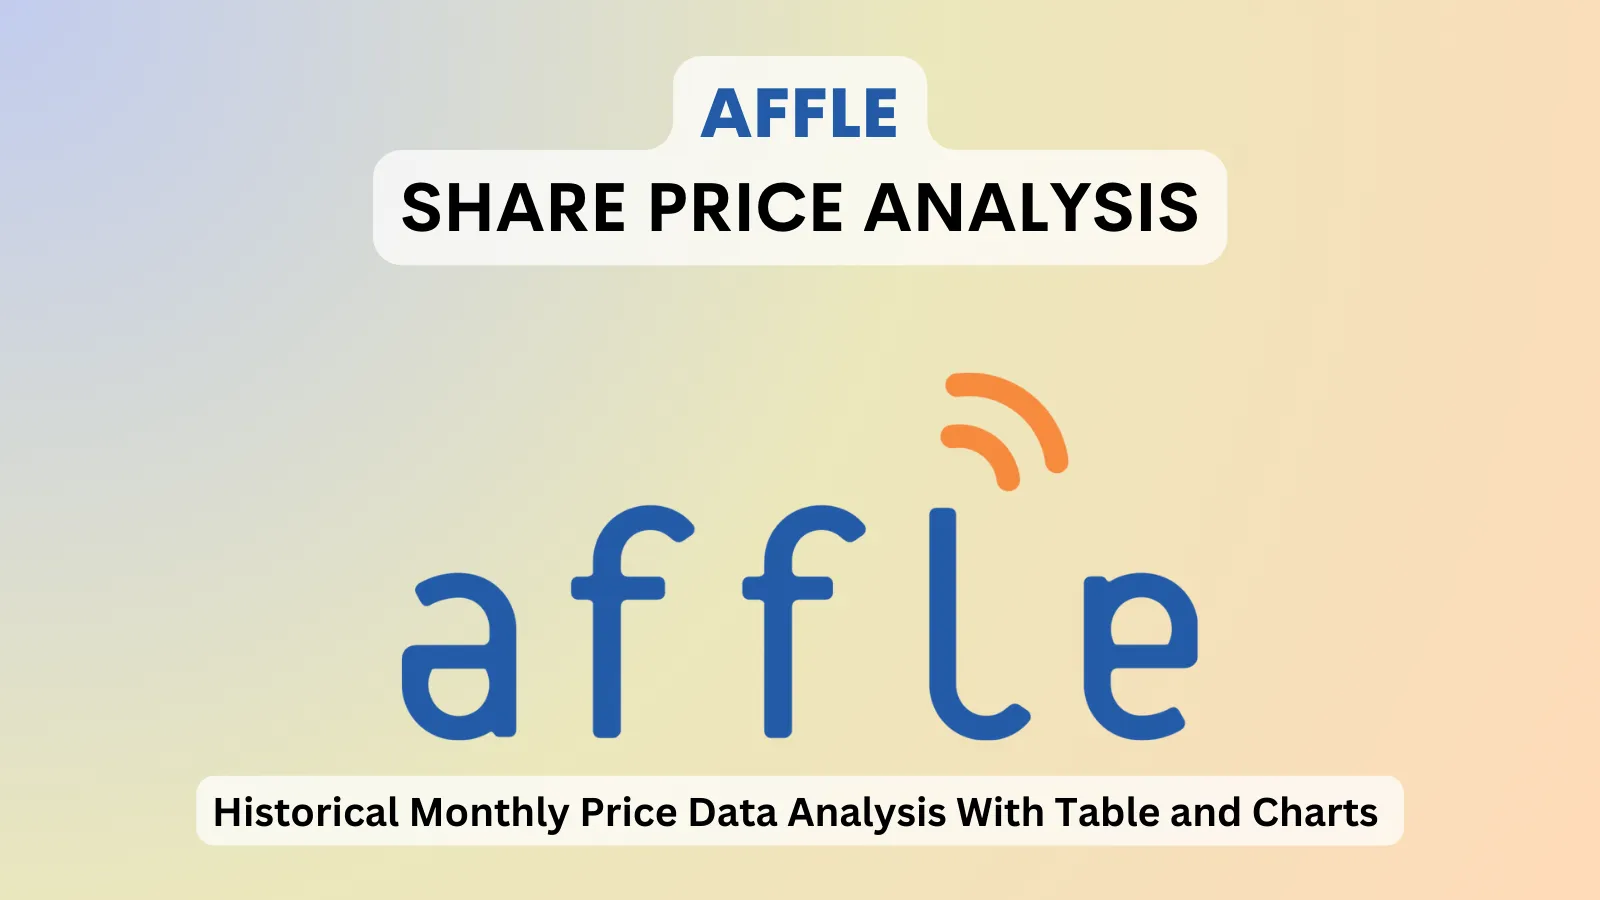 Affle share price analysis